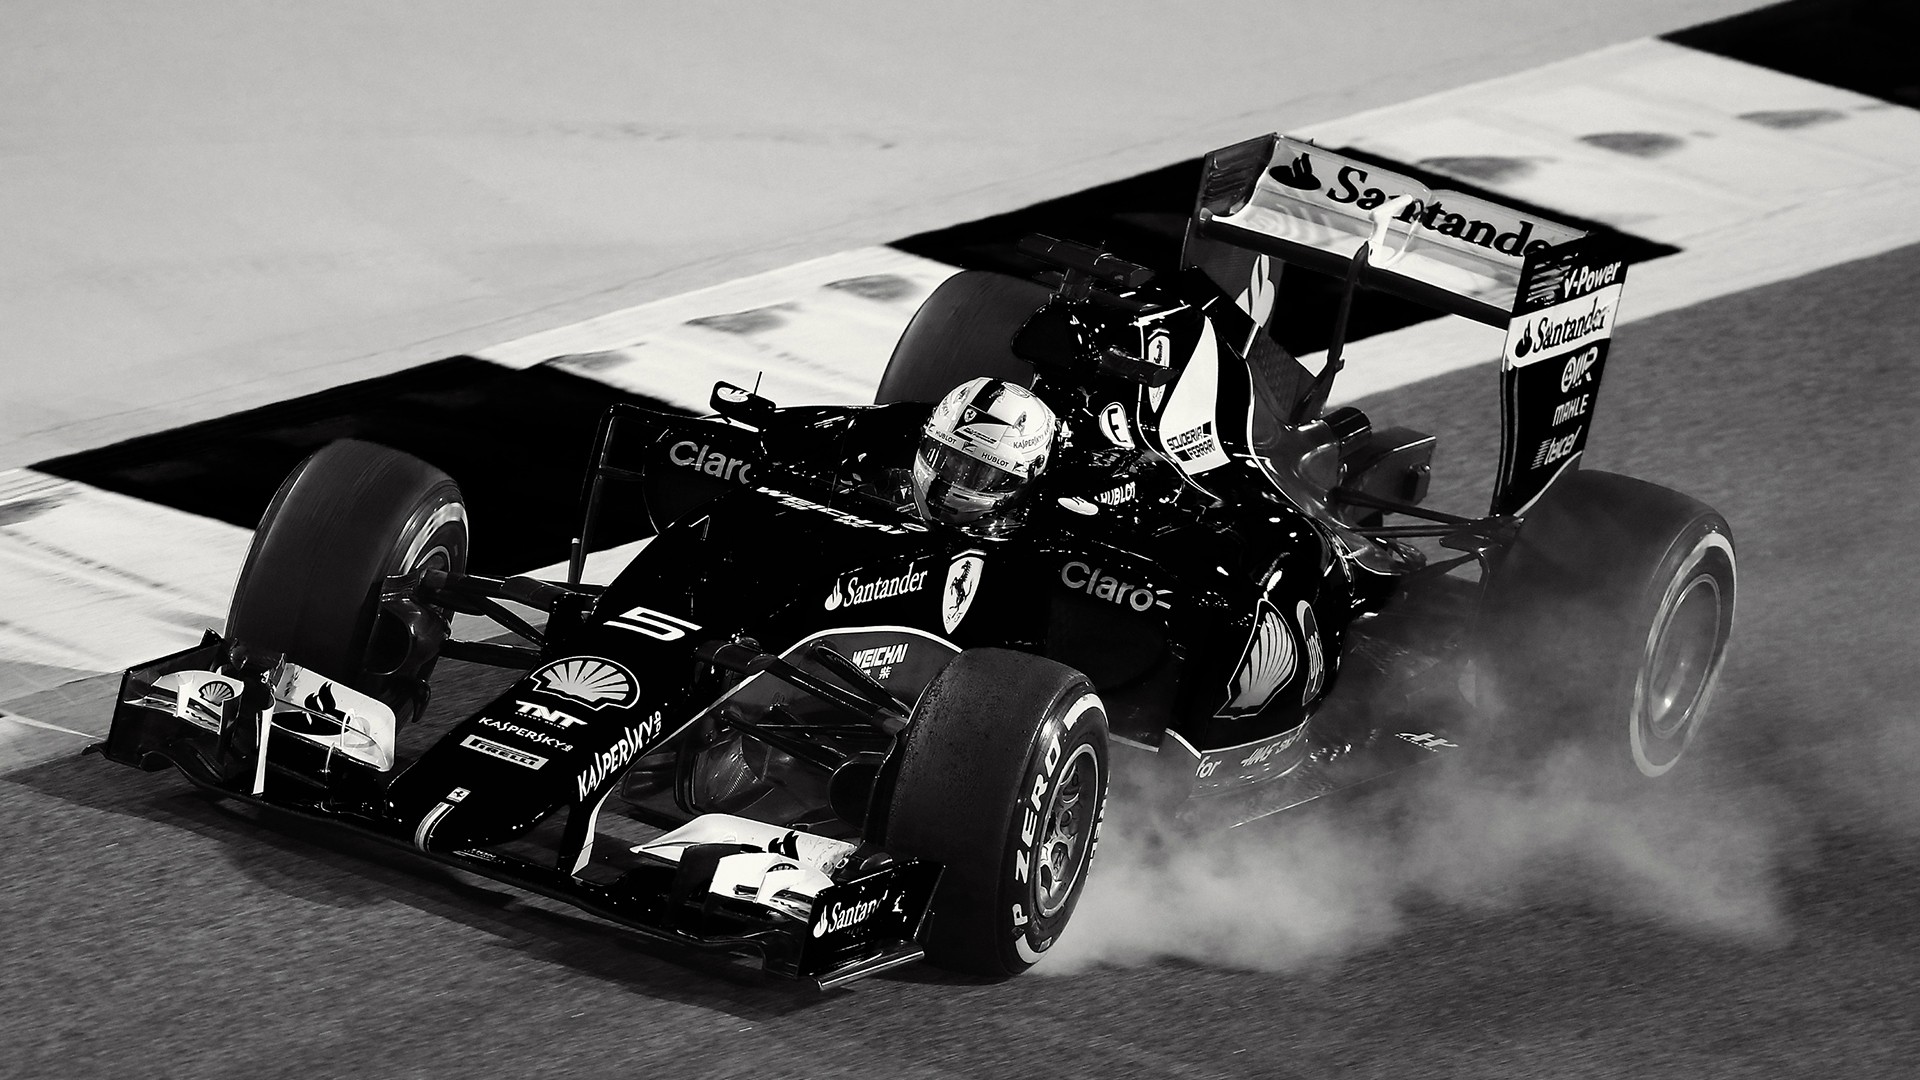 General 1920x1080 Formula 1 ferrari formula 1 car vehicle race cars smoke sport racing motorsport livery